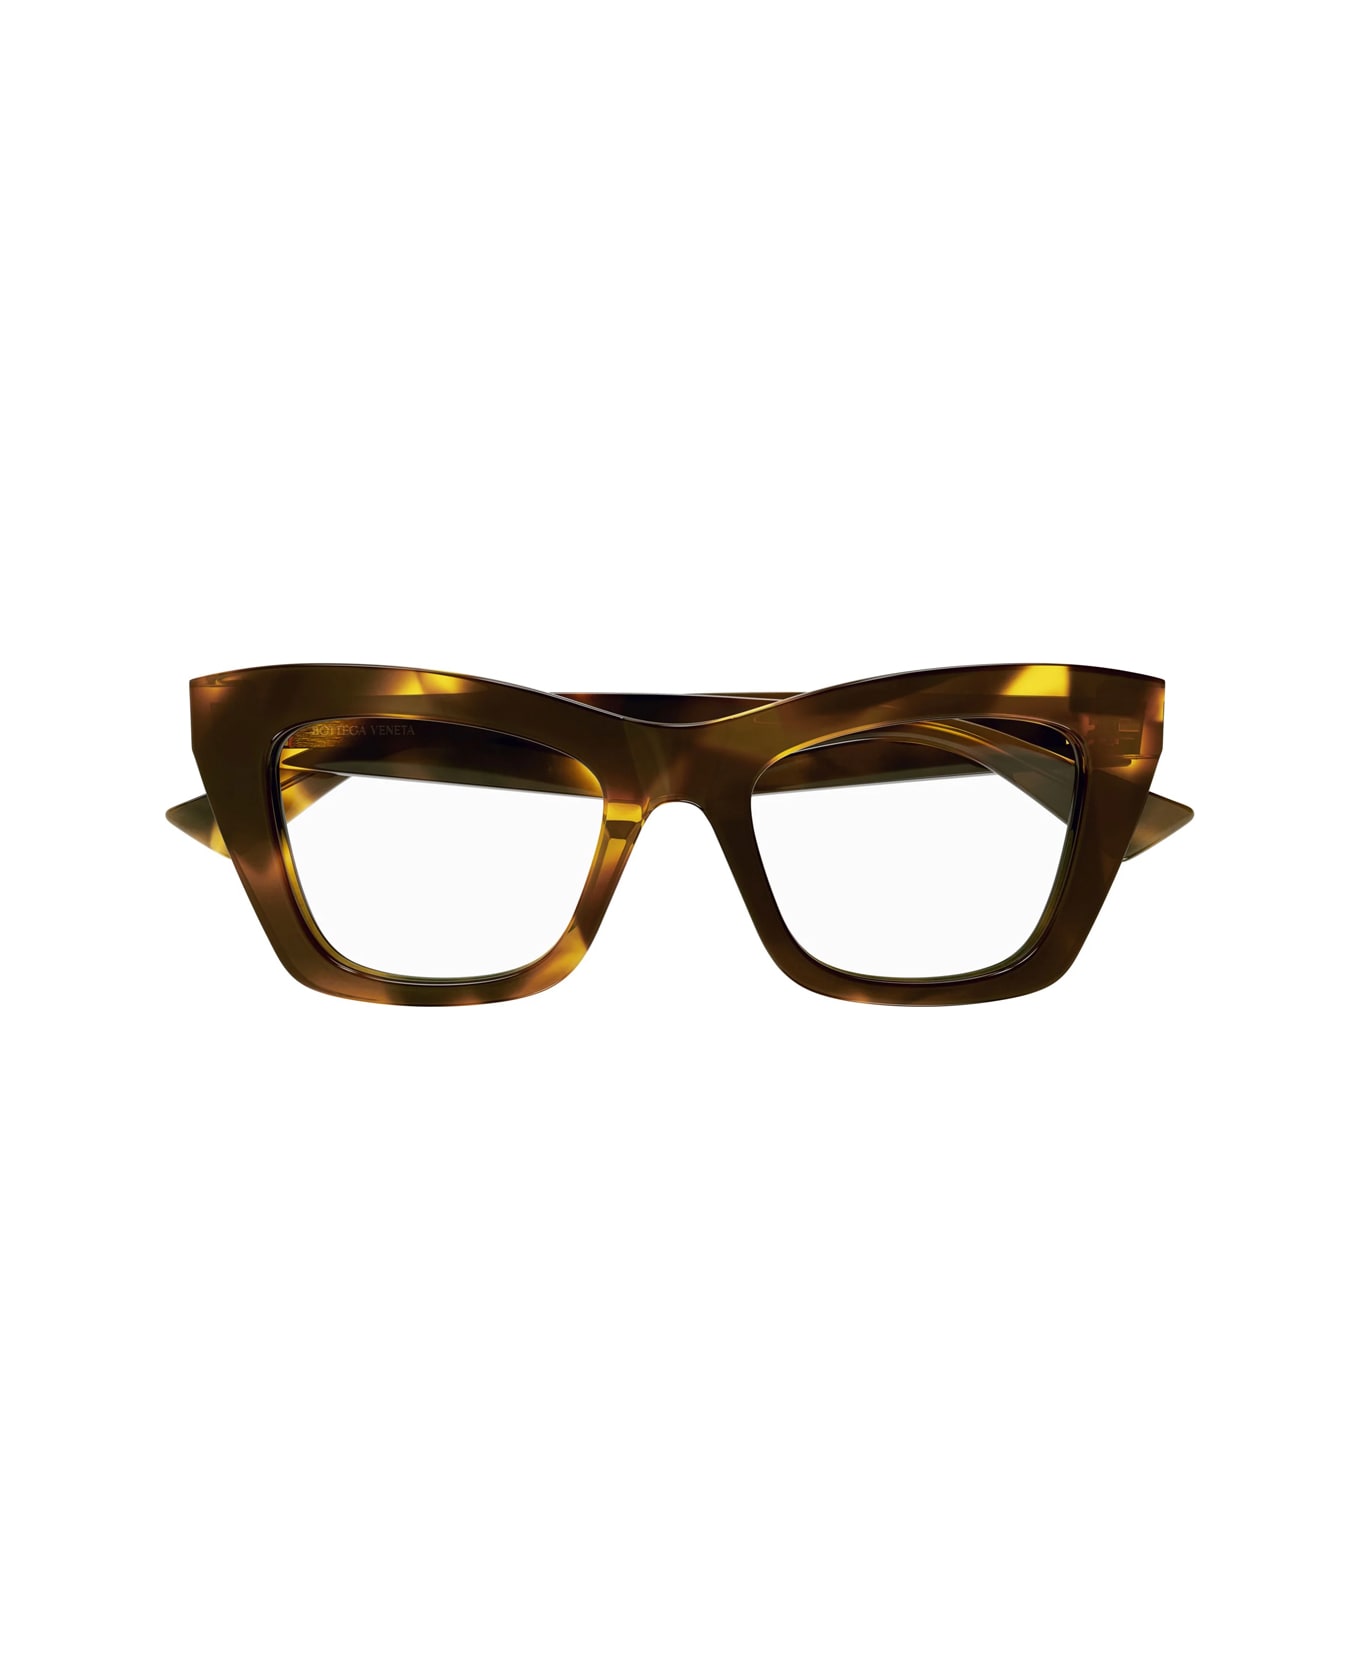 Bottega Veneta Eyewear Bv1215o Line New Classic 005 Glasses - Marrone アイウェア